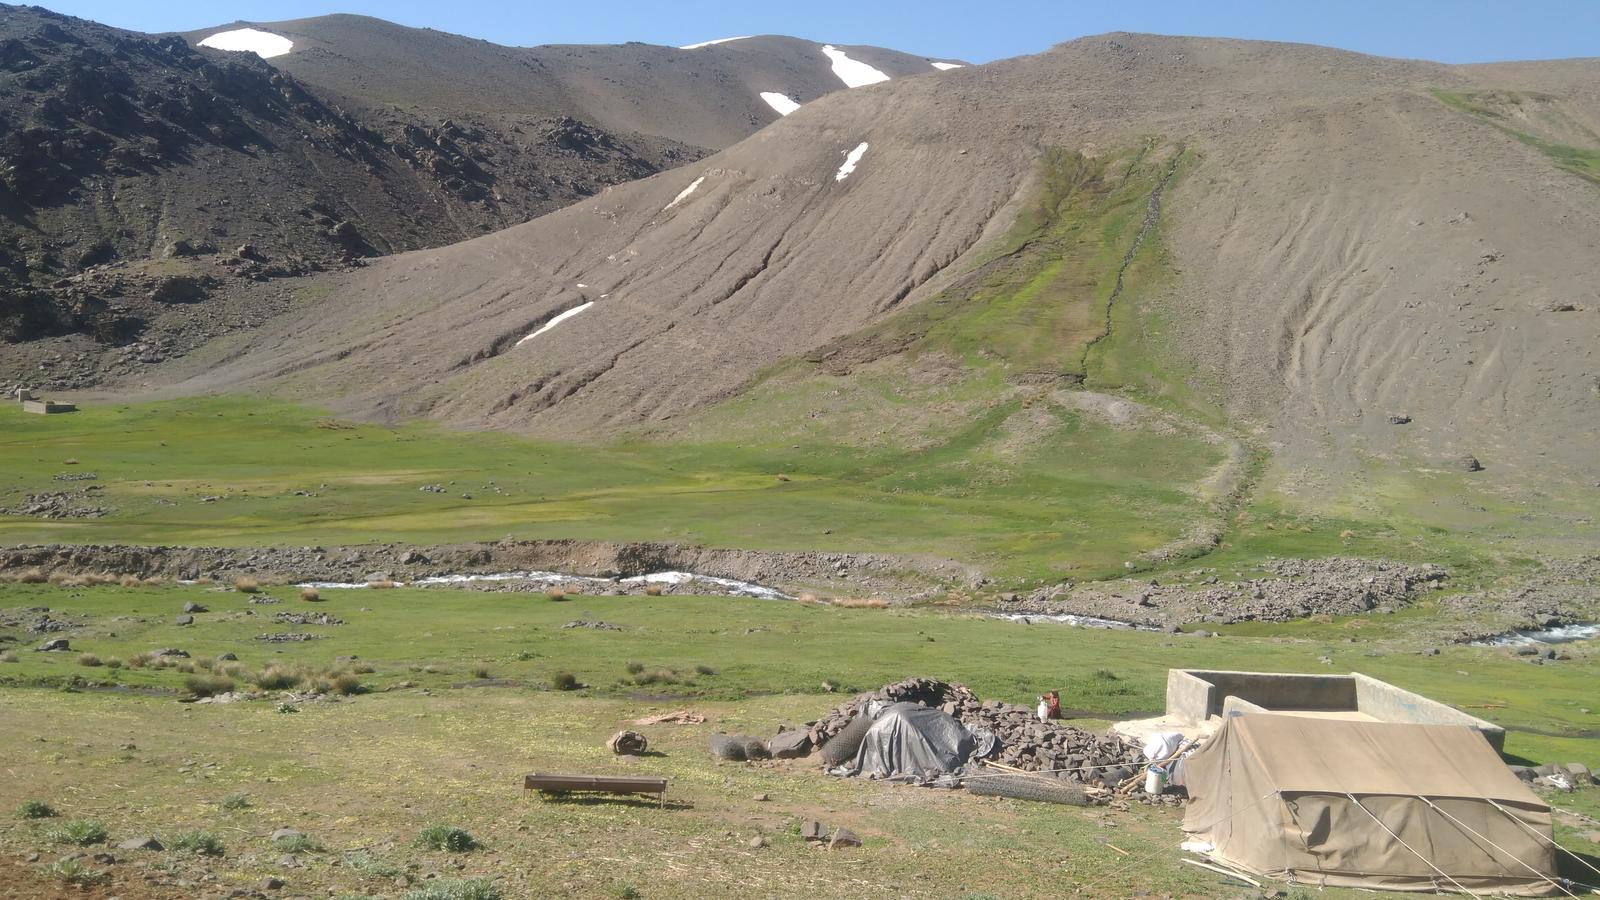 عشایر مسیر قله شاه نشین, Nomads In Route of Shahneshin Peak